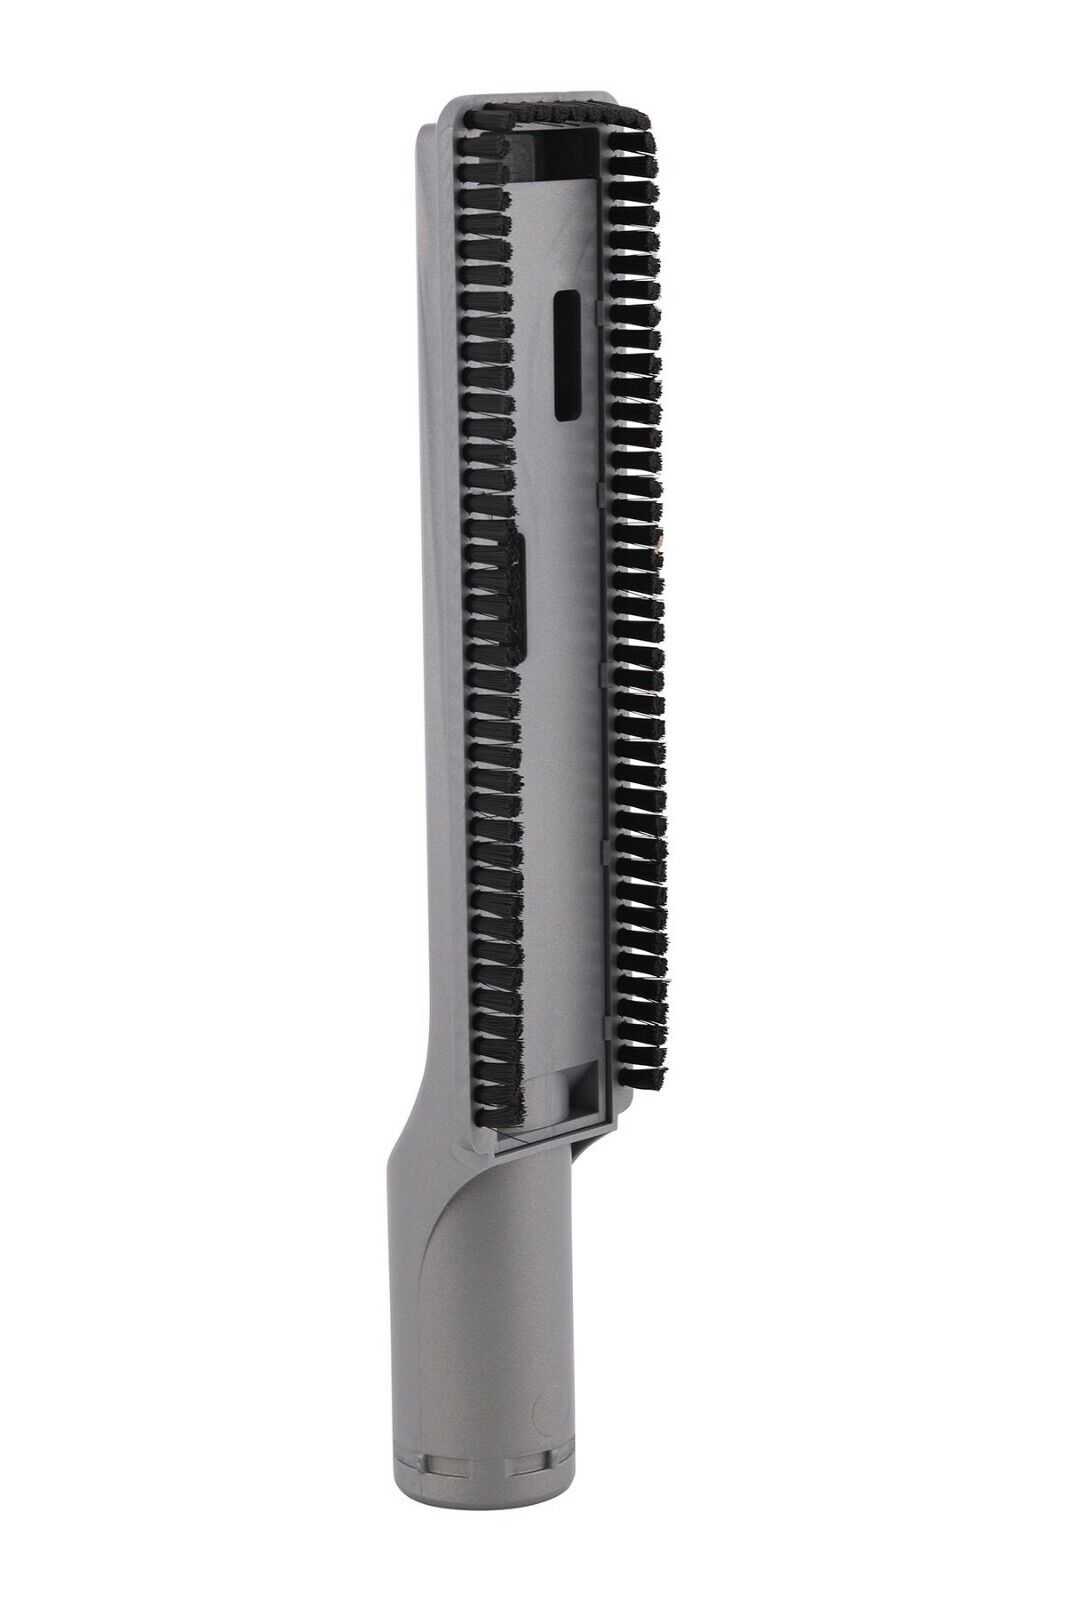 Black & Decker spazzola lunga scopa MultiPower Pet Allergy Pro 45Wh CUA525BH AP